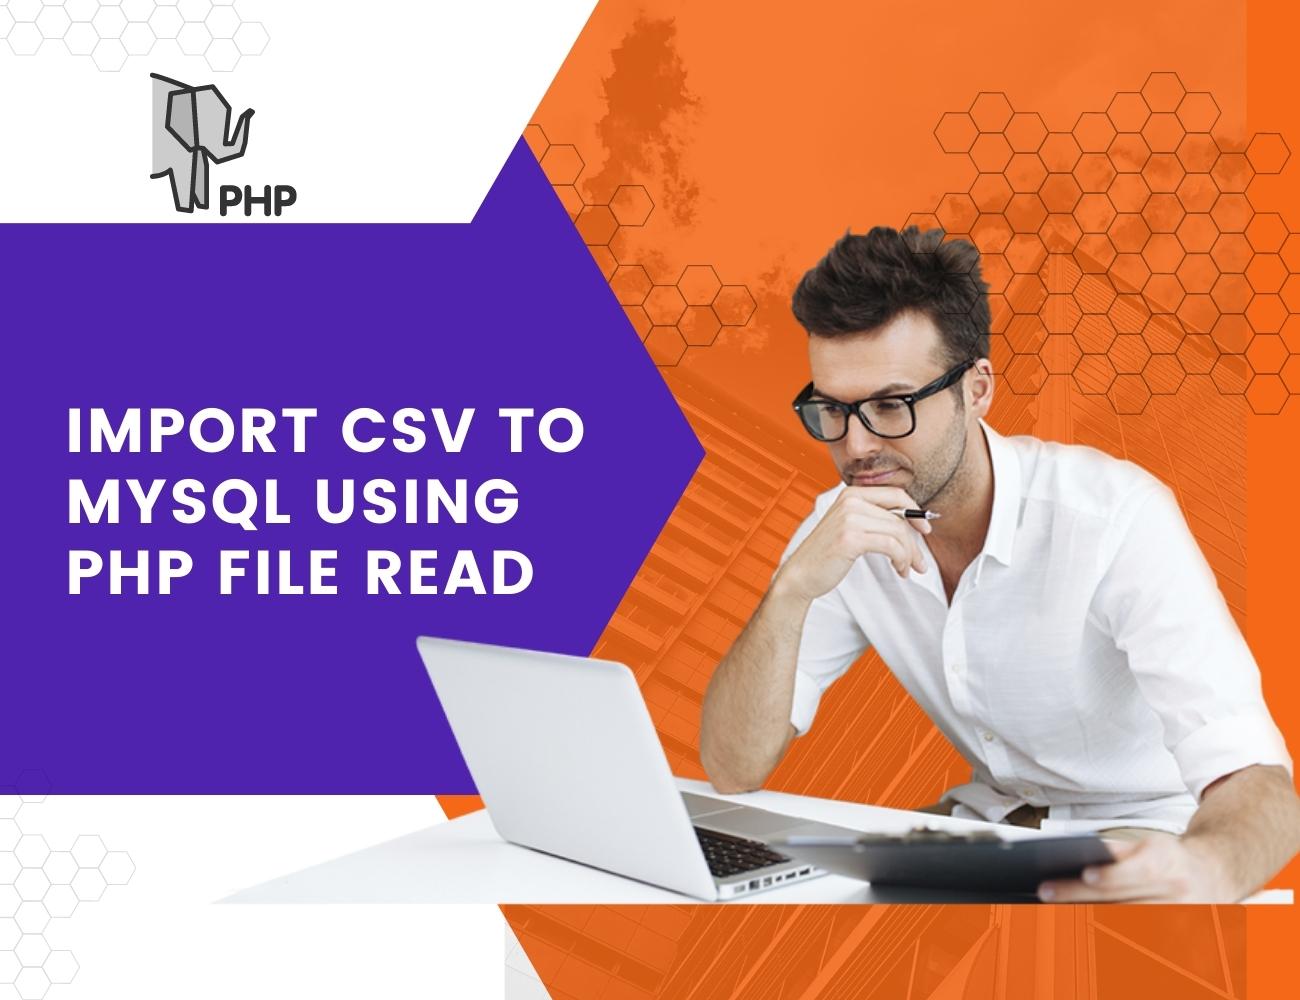 Import CSV to Mysql using PHP